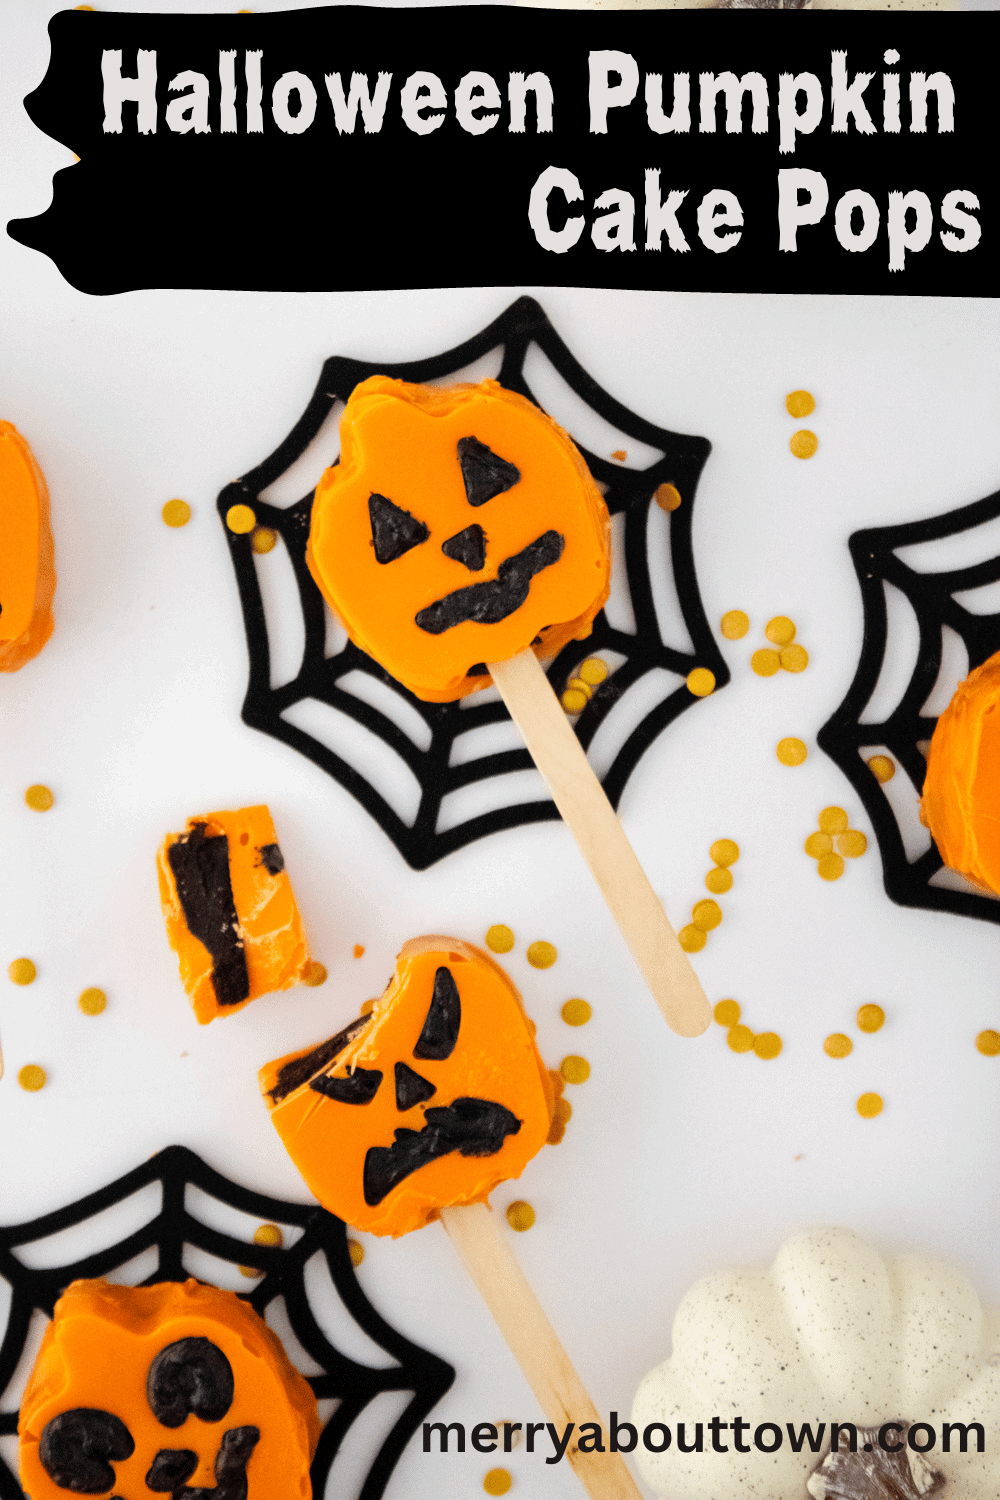 Halloween Pumpkin Cake Pops pin for Pinterest